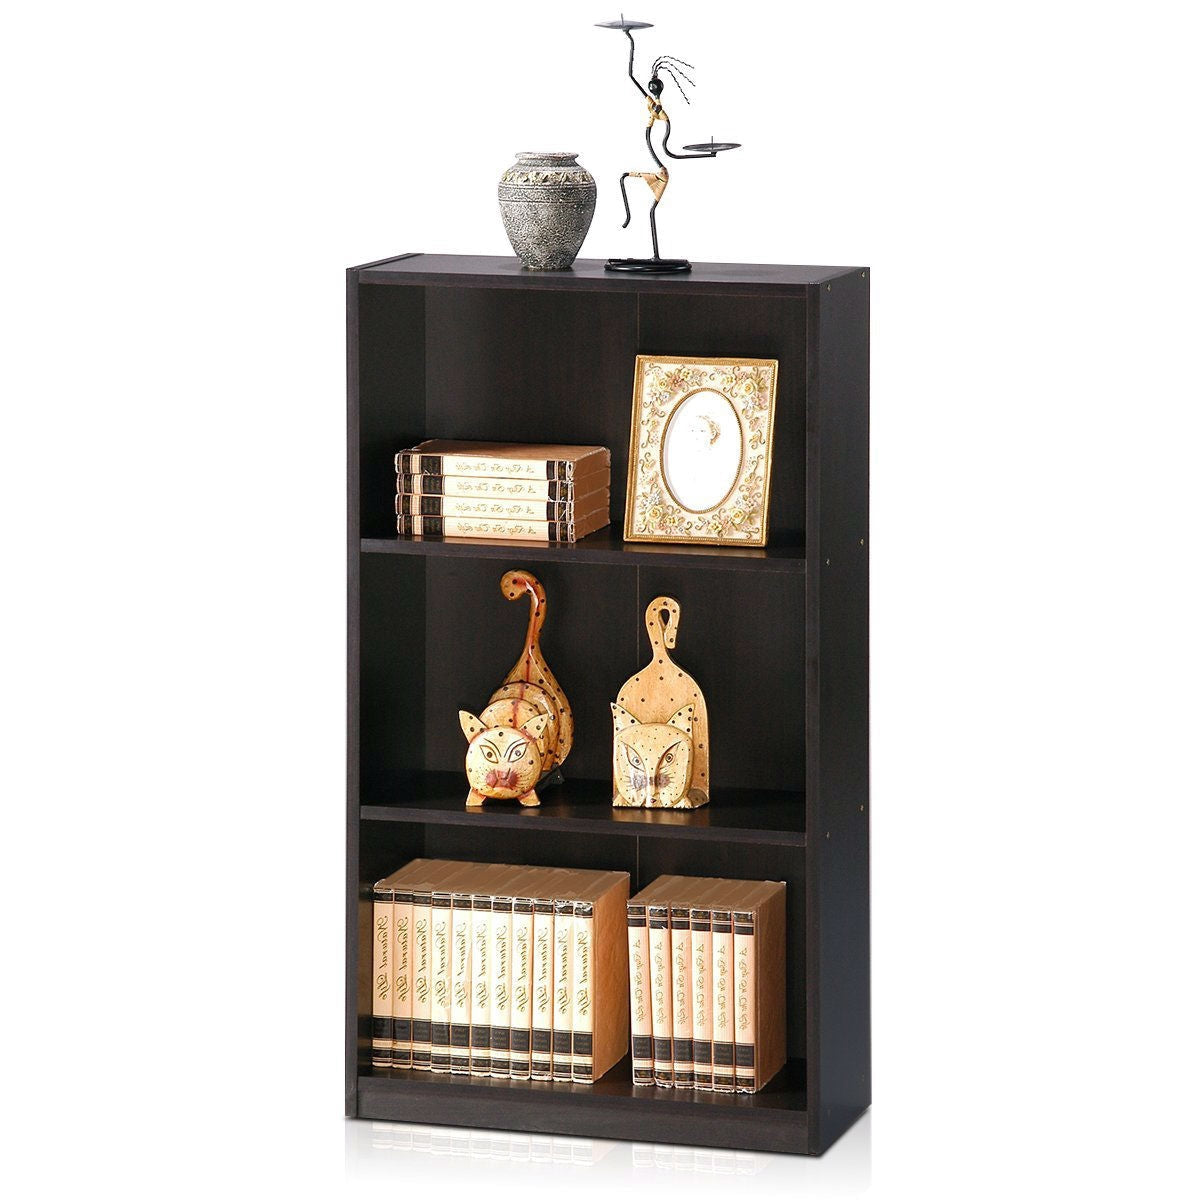 Living Room > Bookcases - Modern 3-Shelf Bookcase In Espresso Wood Finish